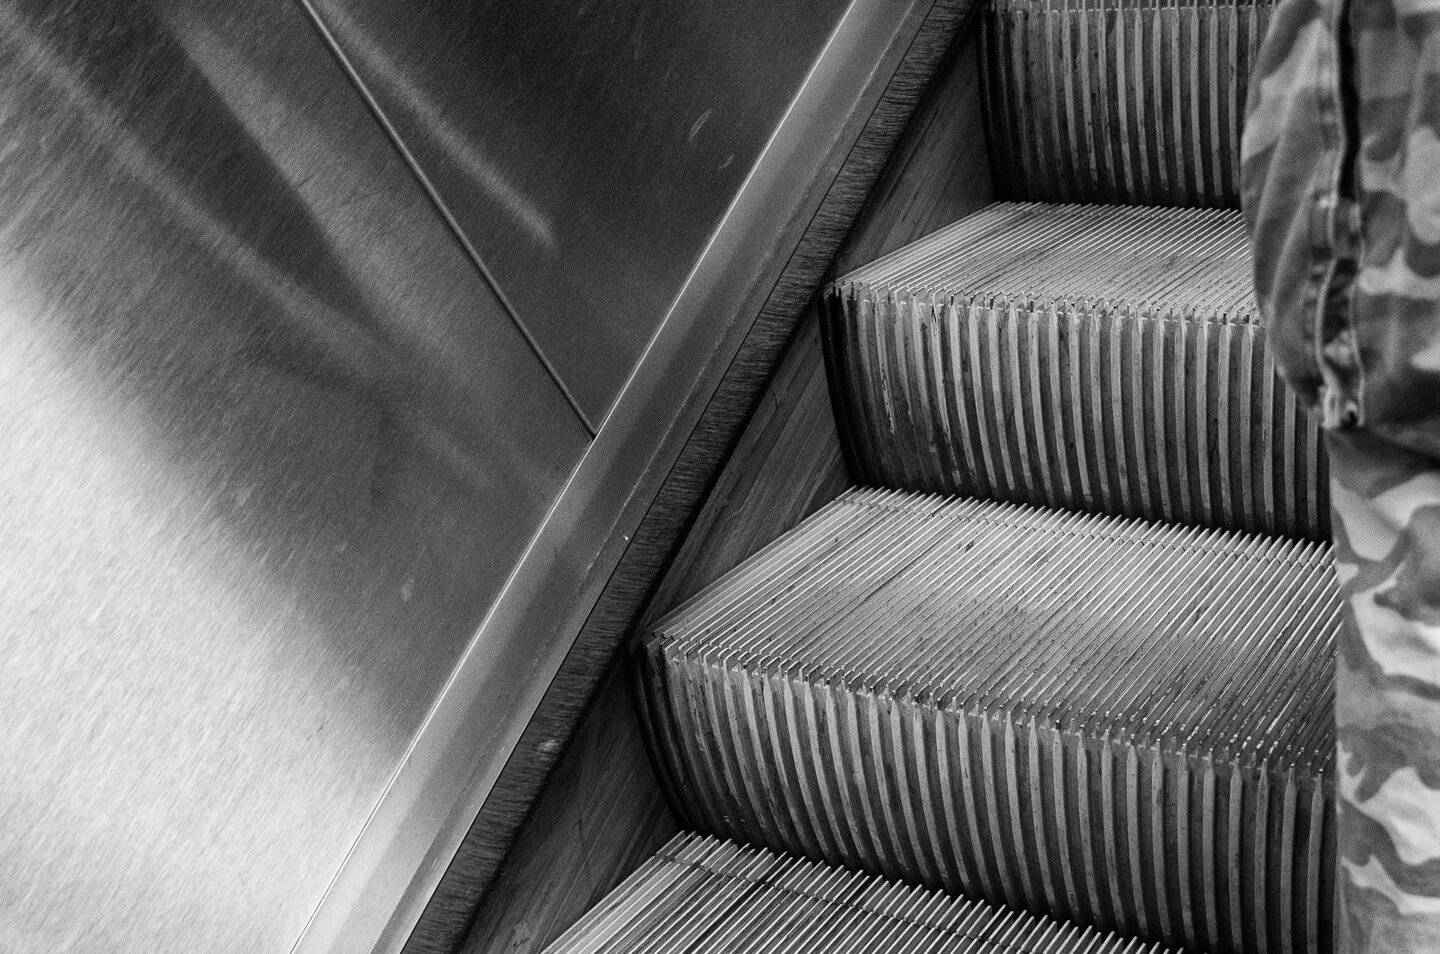 An Escalator. New York, New York 2015